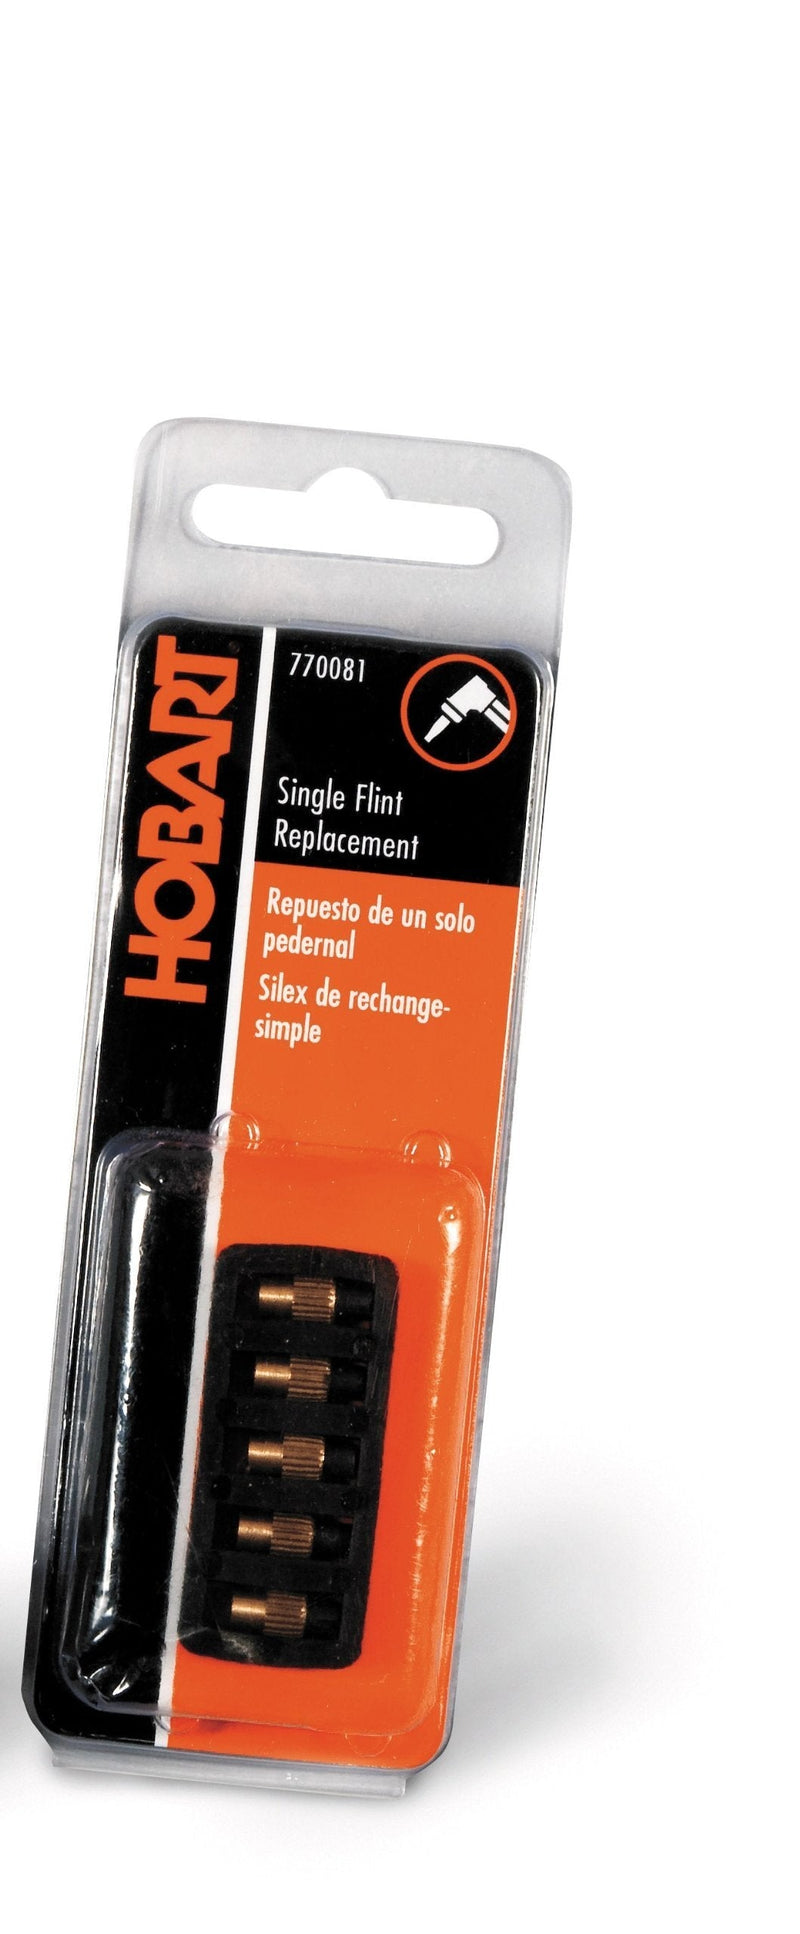  [AUSTRALIA] - Hobart 770081 Replacement Flints for Single Flint Striker, 5-Pack